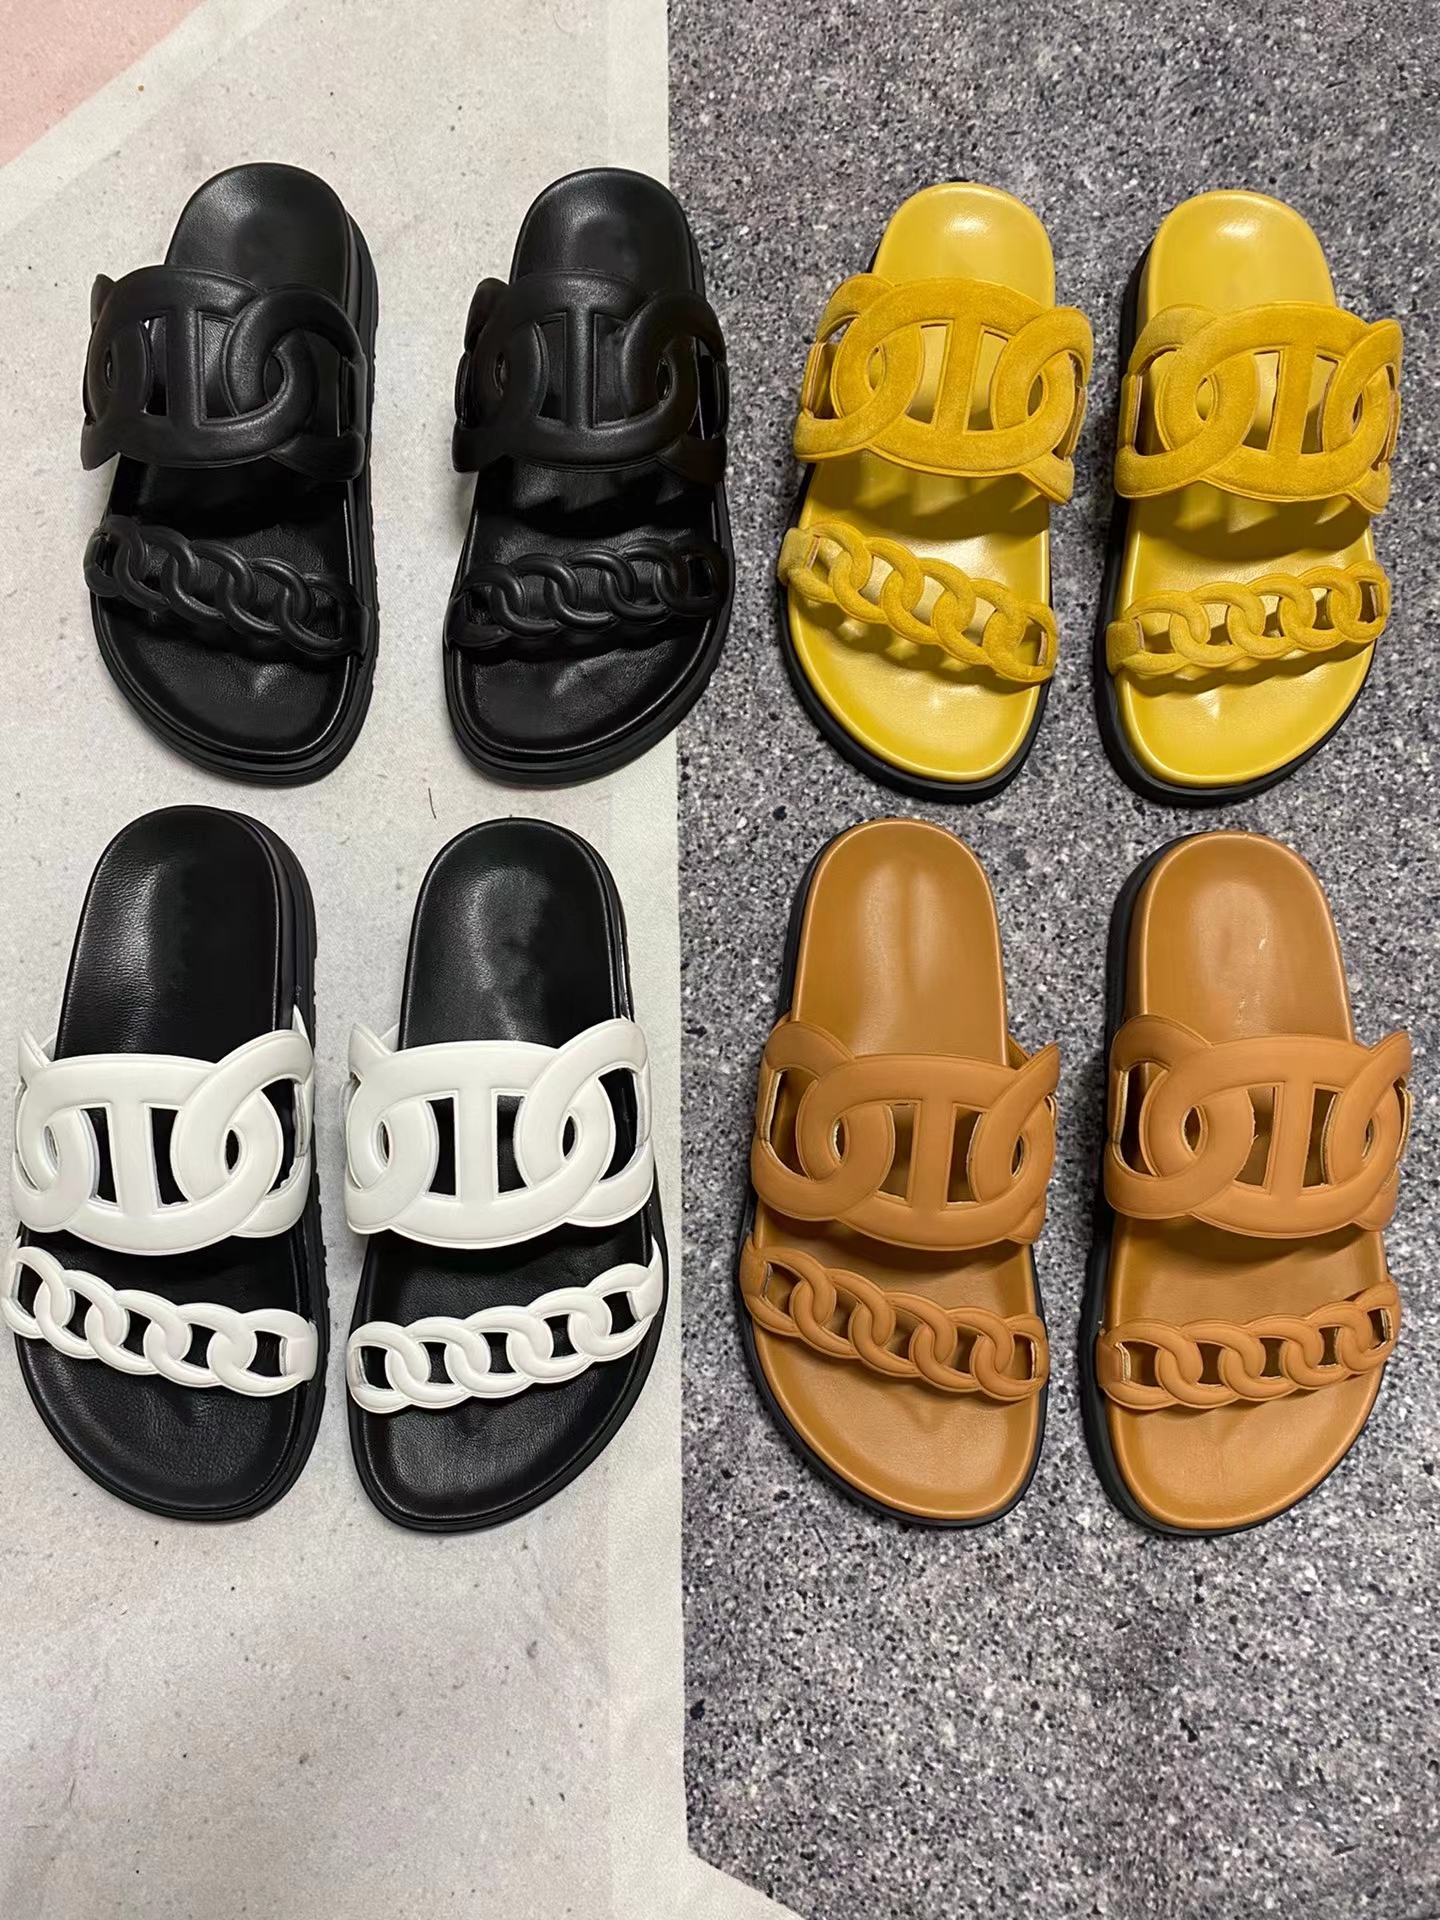 

womens shoes designer sandal H platform men slipper slides thick bottom flip flops summer flat shoes casual beach sandale genuine leather high quality with box 10A